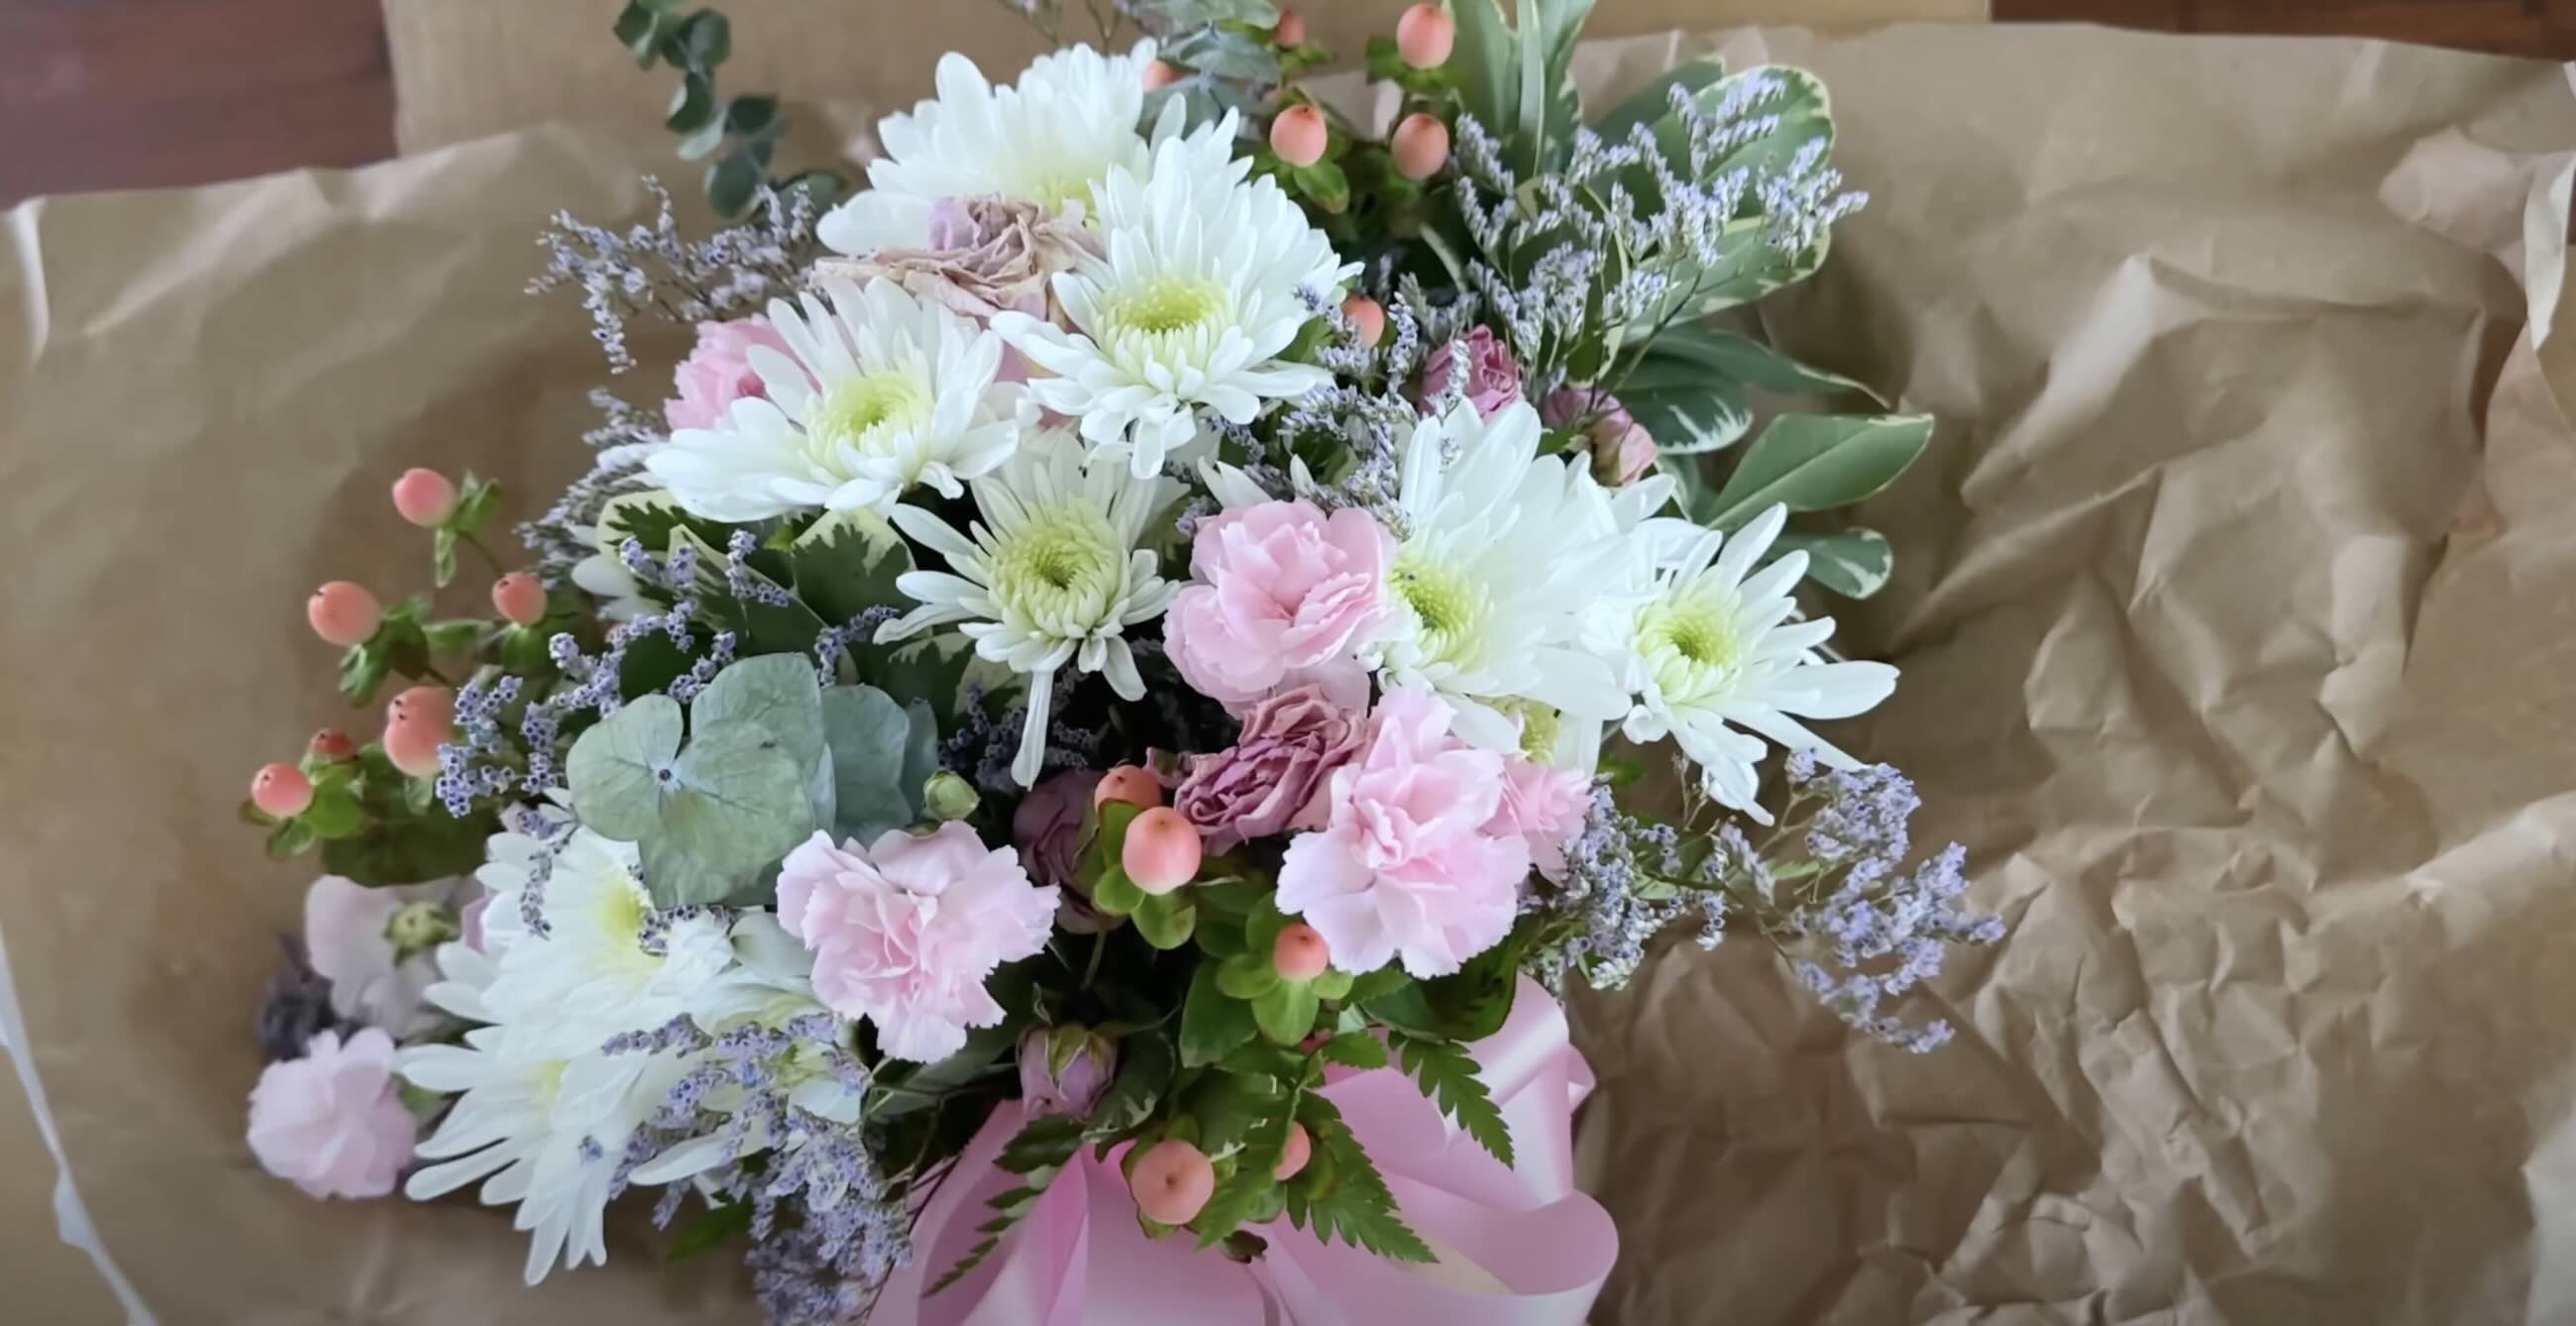 How To Ship Floral Arrangements